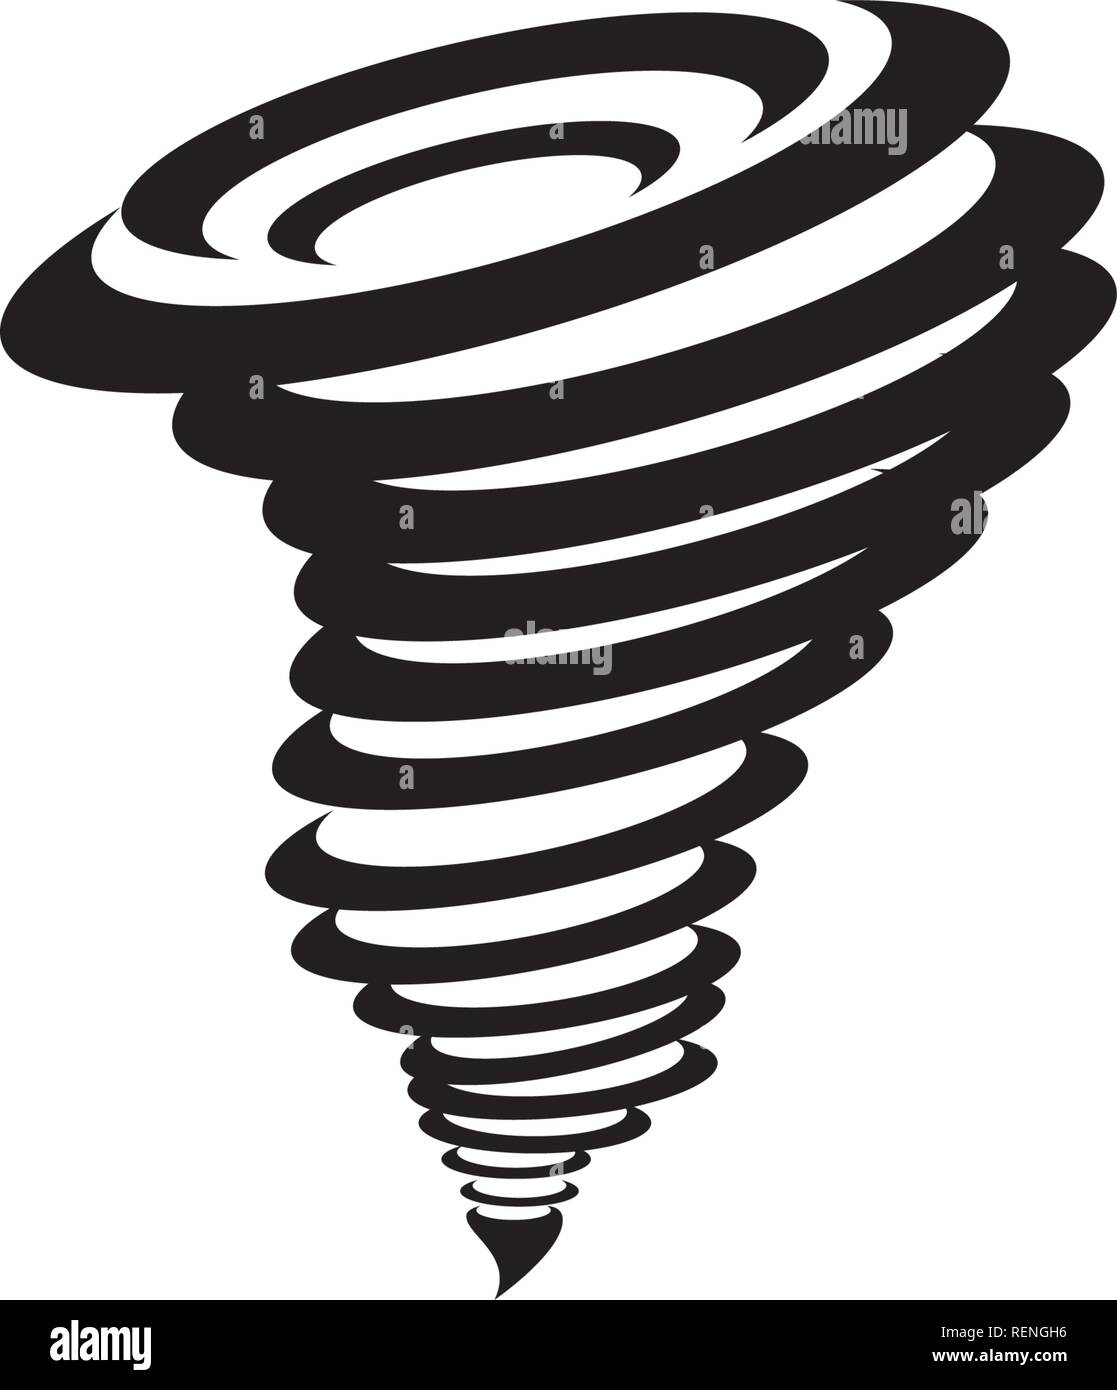 Logo vectoriel symbole tornade illustration design Illustration de Vecteur